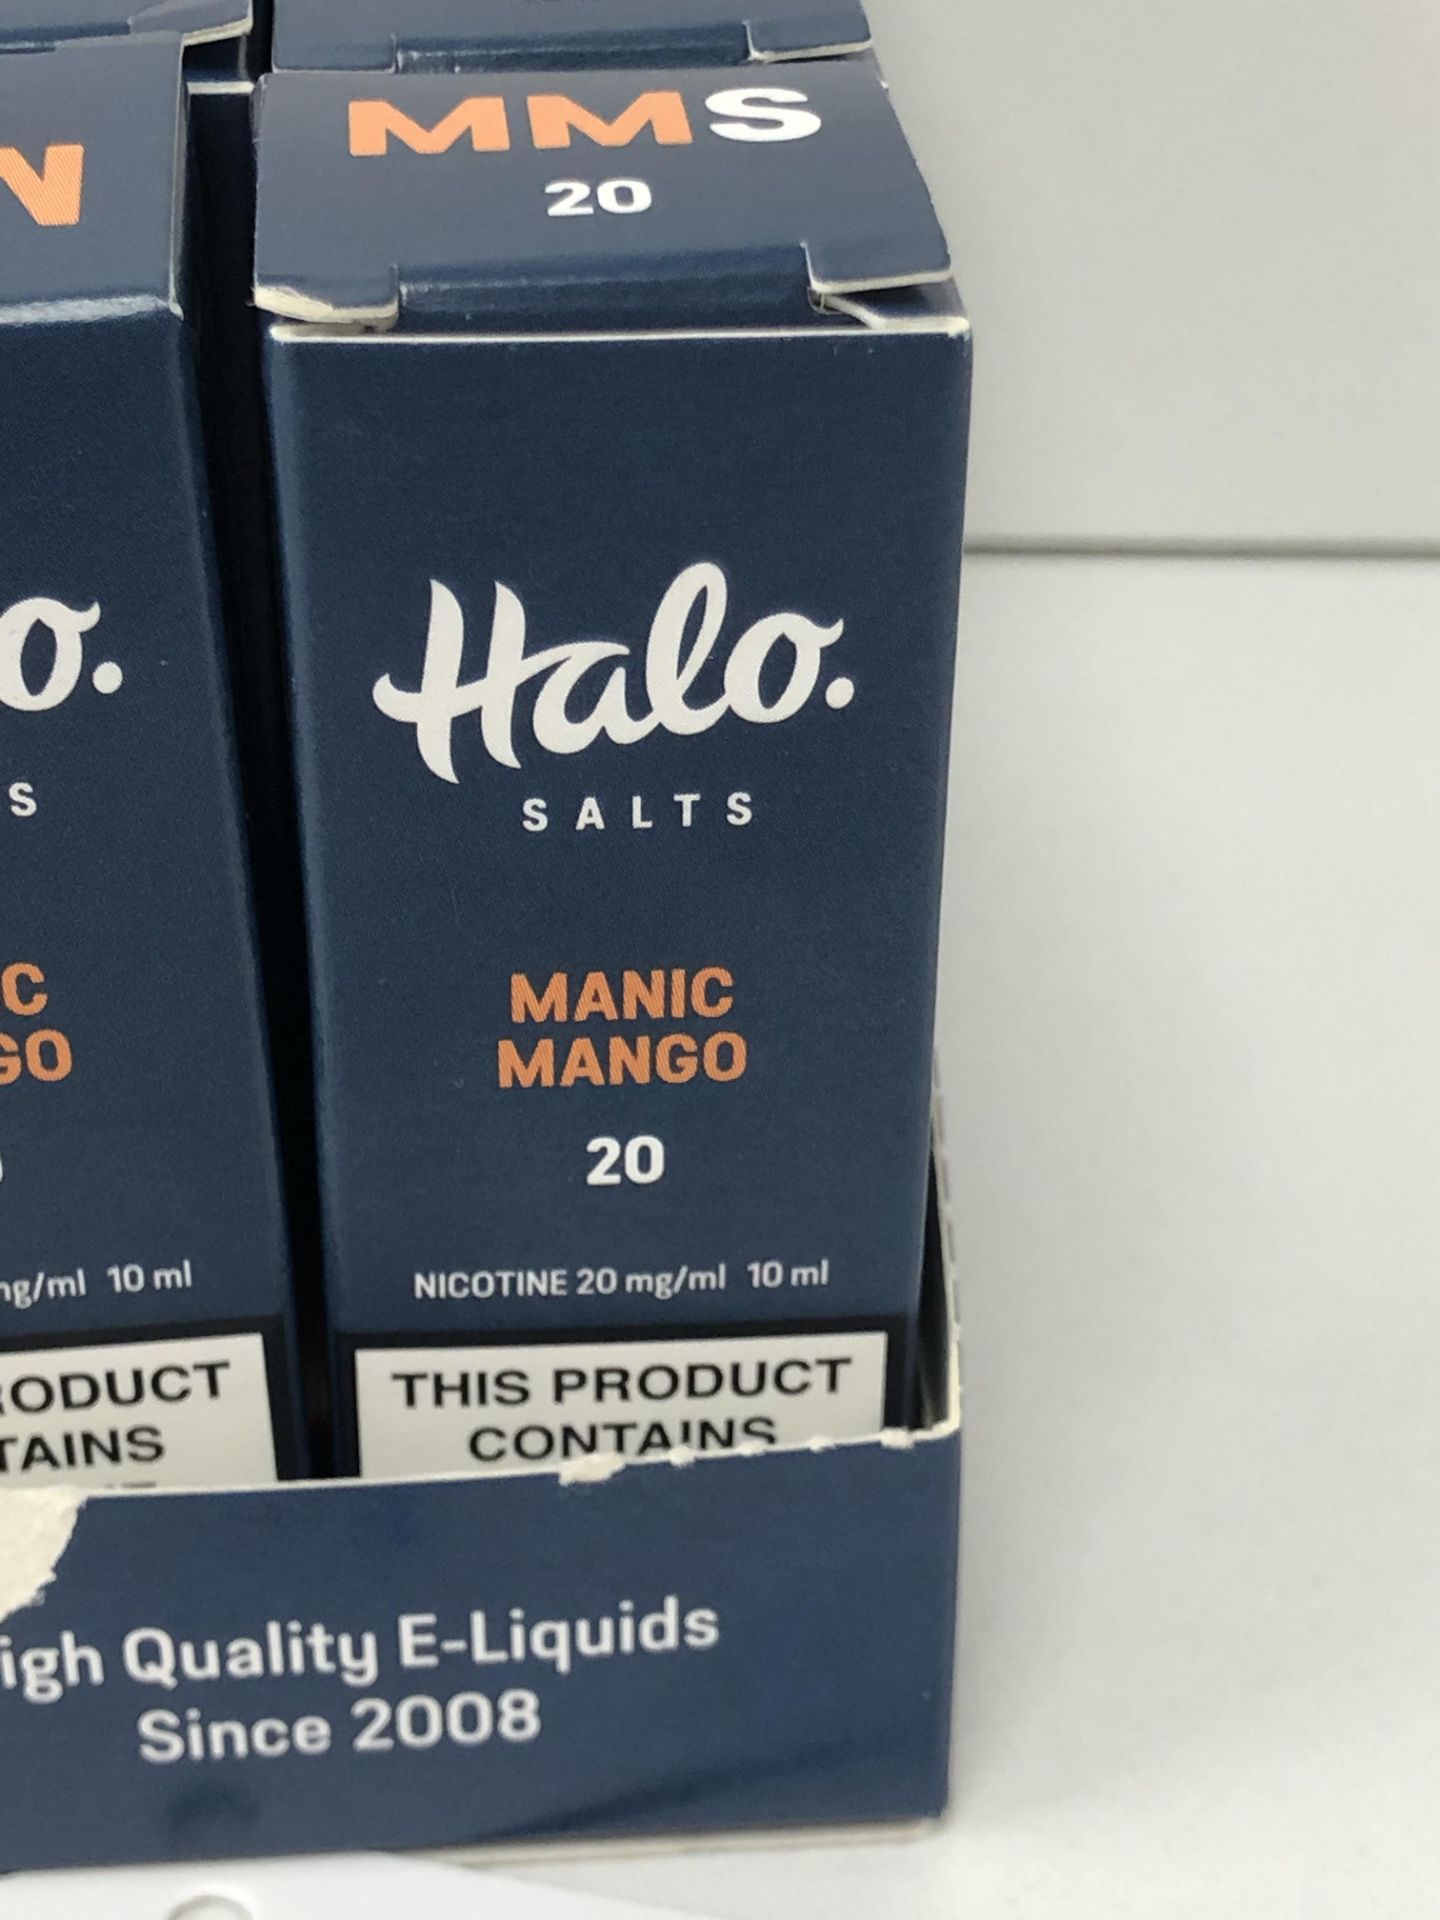 10 x Vapour co Manic Mango Halo salts 20 Mg/Ml BNIB - 10 ml |96187678 - Image 3 of 3